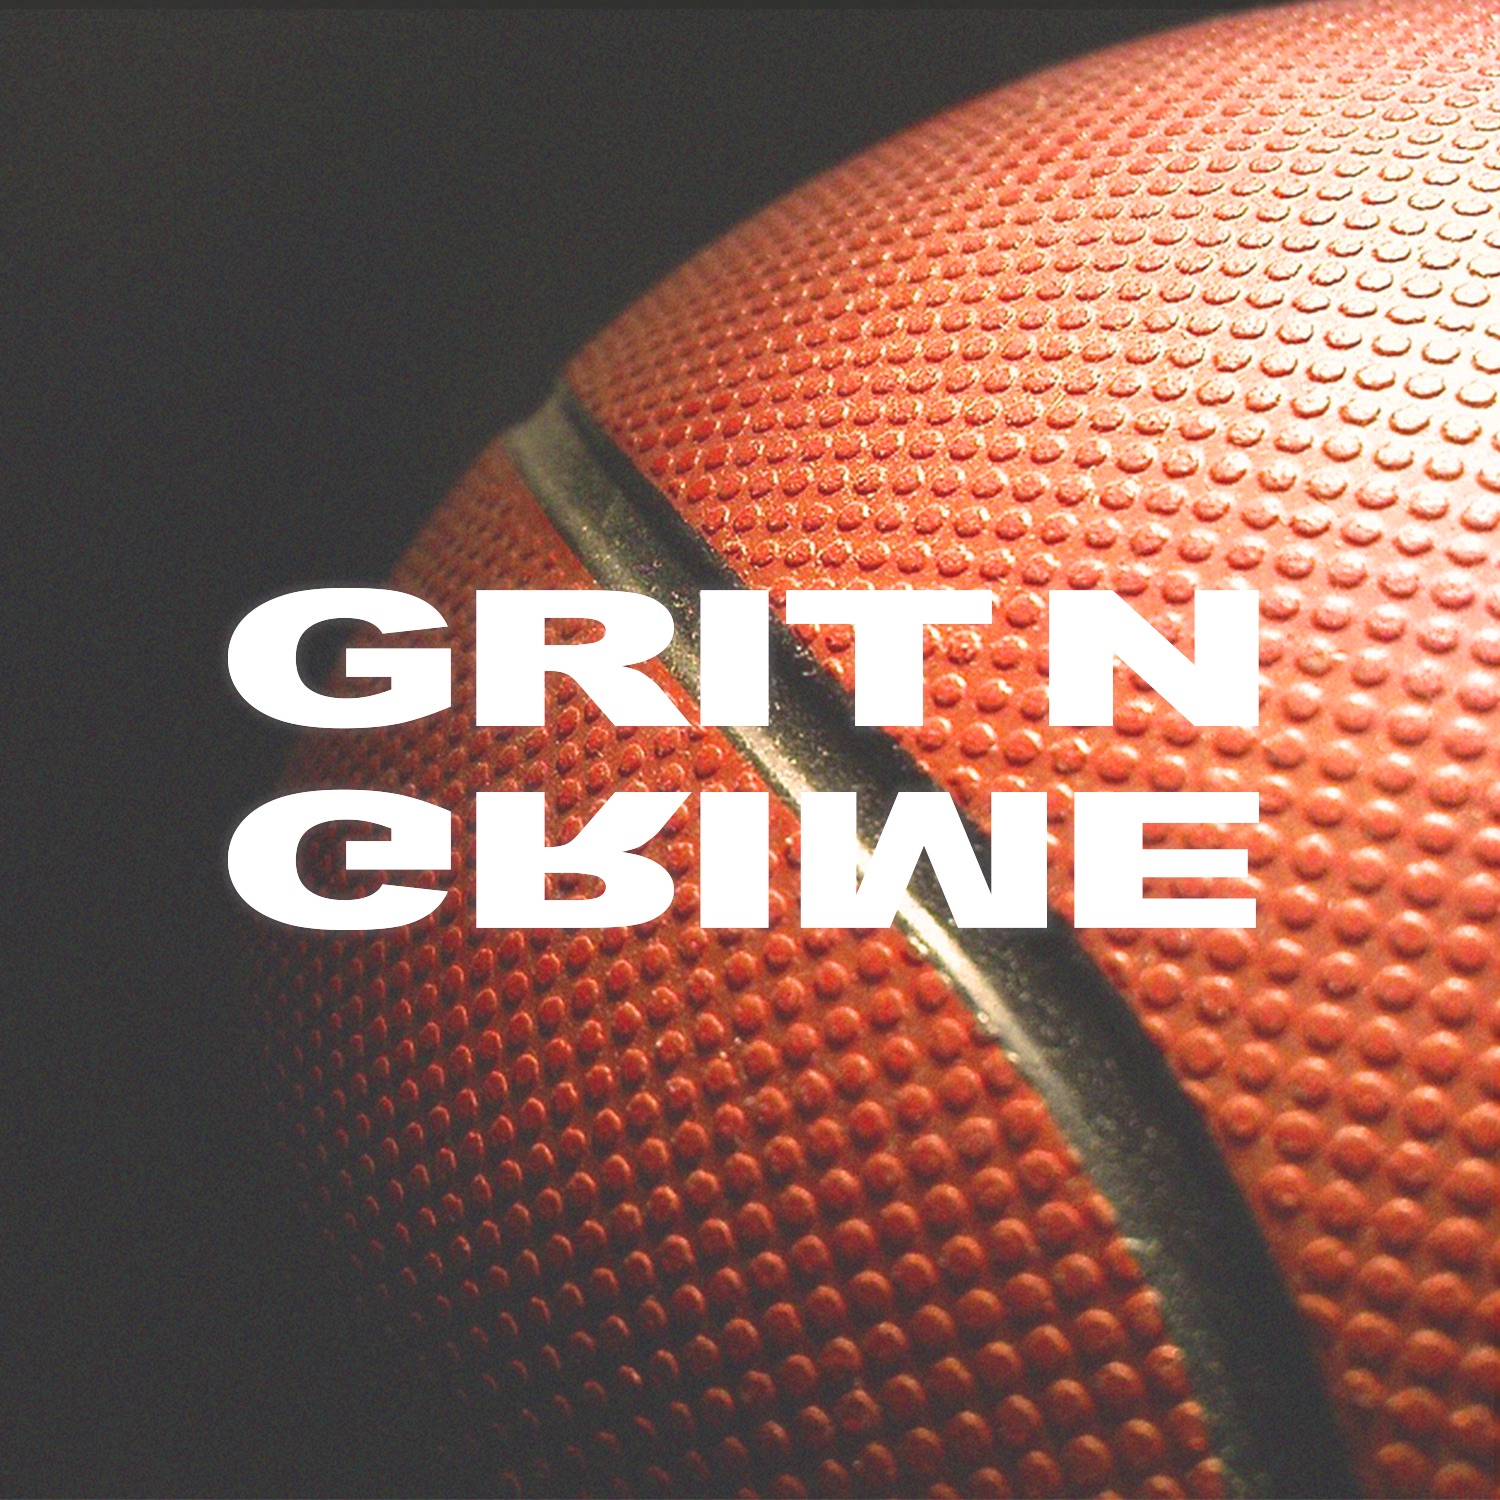 Grit N Grime Basketball Podcasts